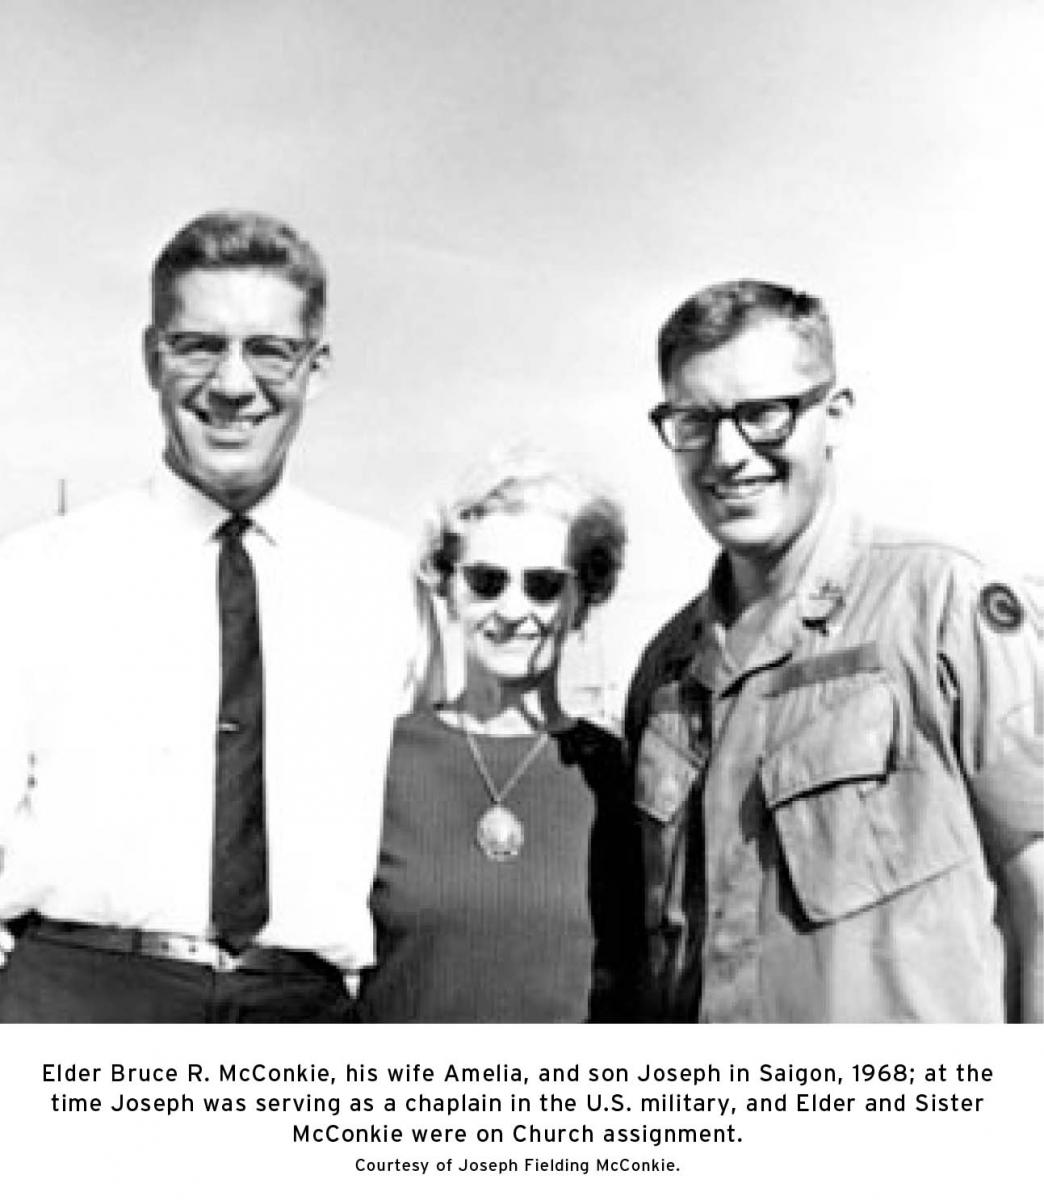 Elder Bruce R. McConkie, his wife Amelia, and son Joseph in Saigon